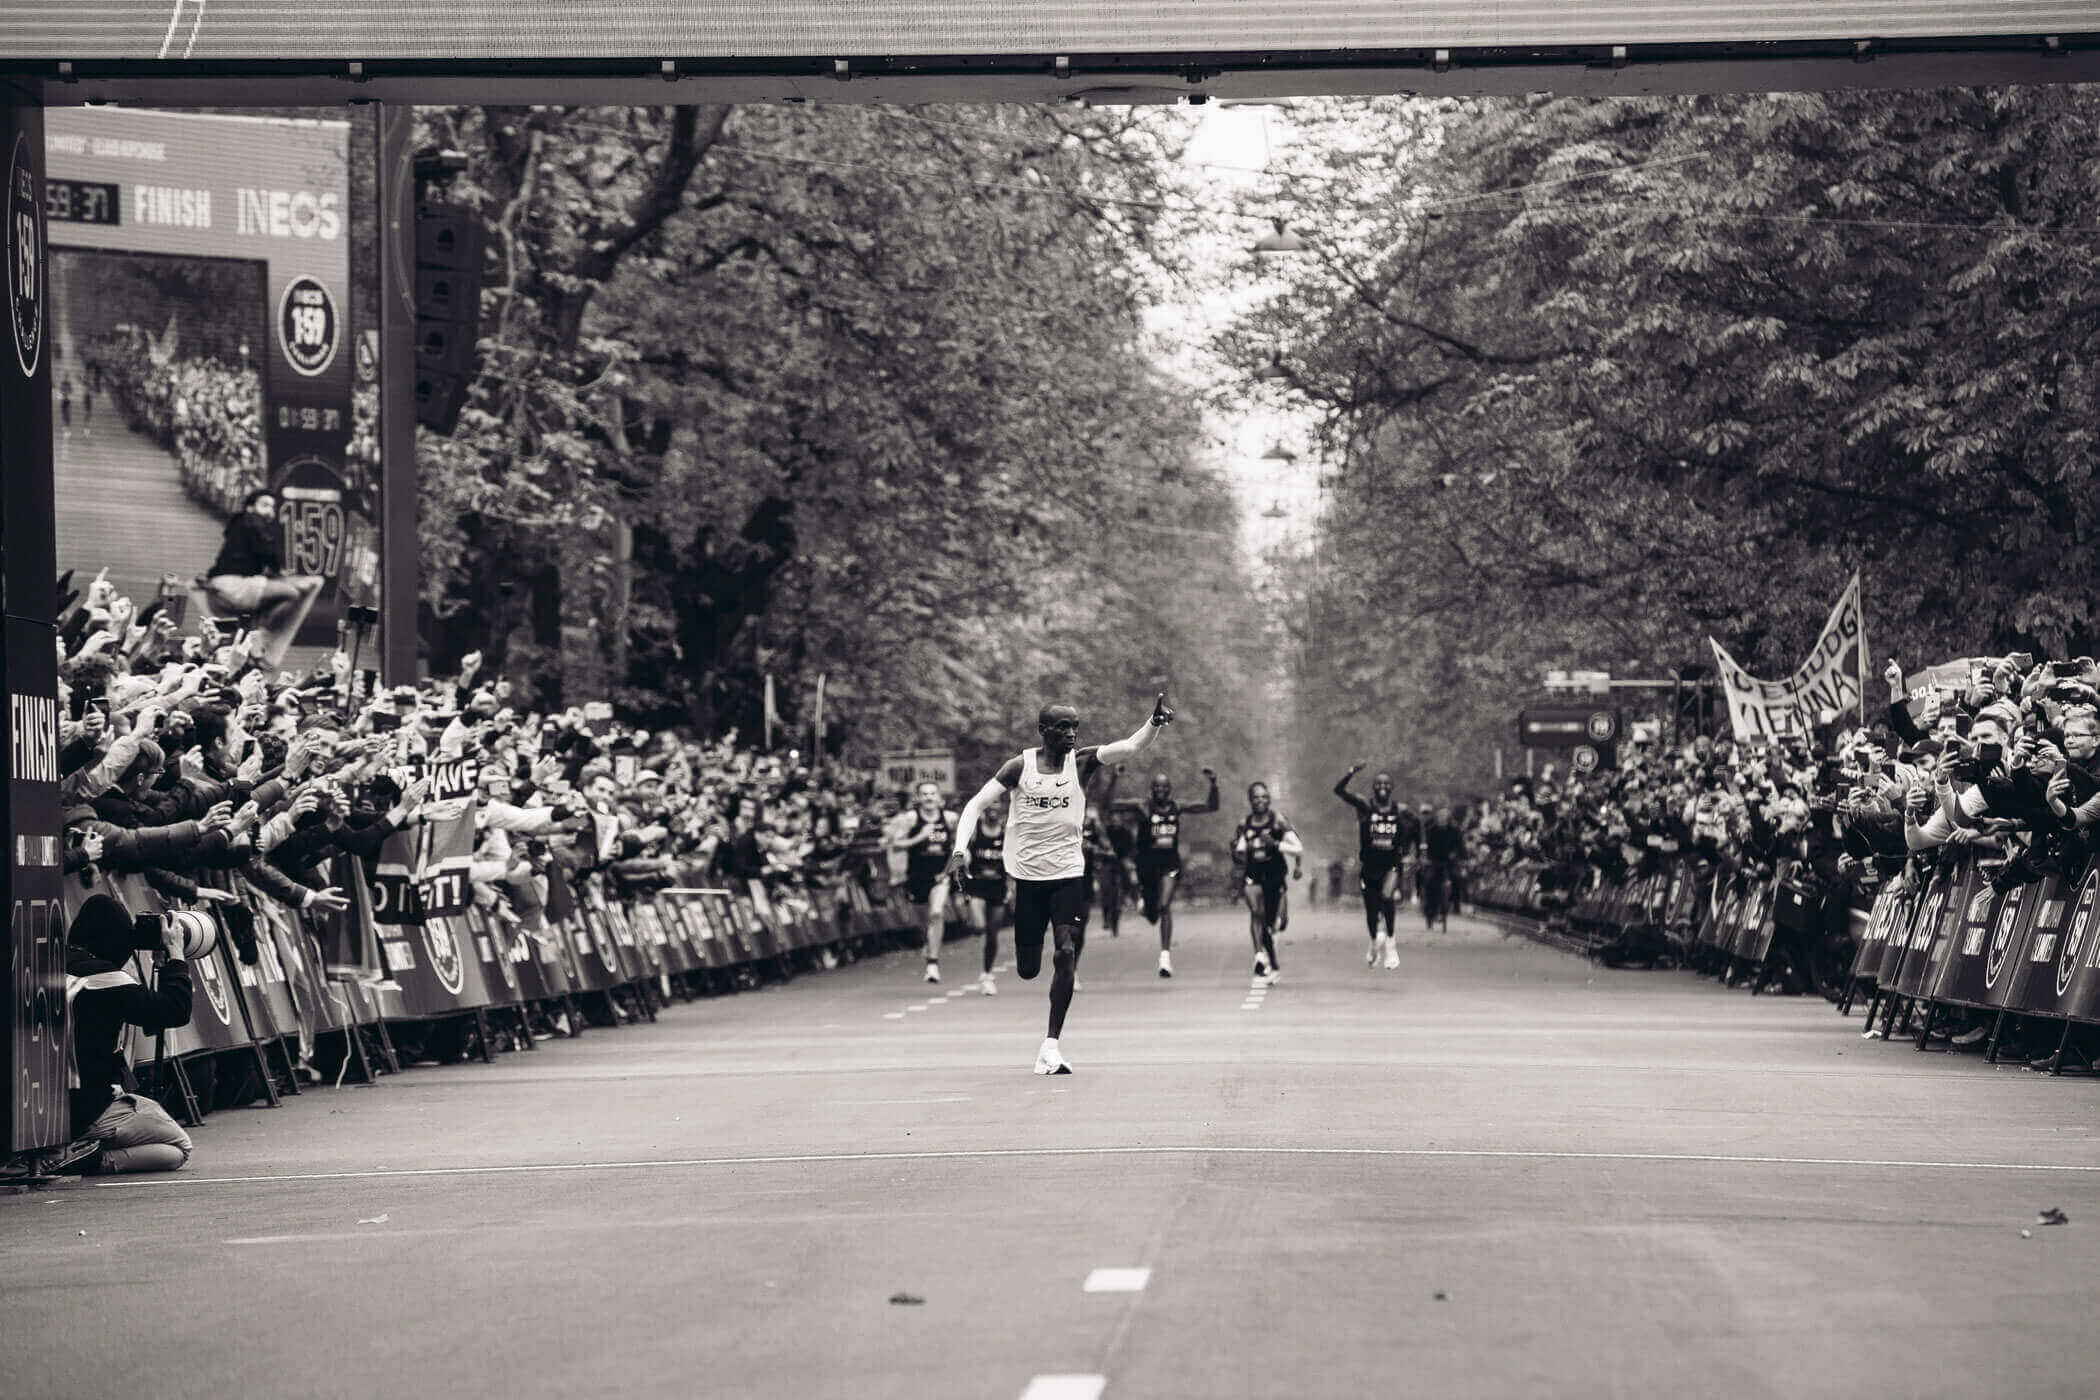 Eliud Kipchoge's winning run at Berlin marathon